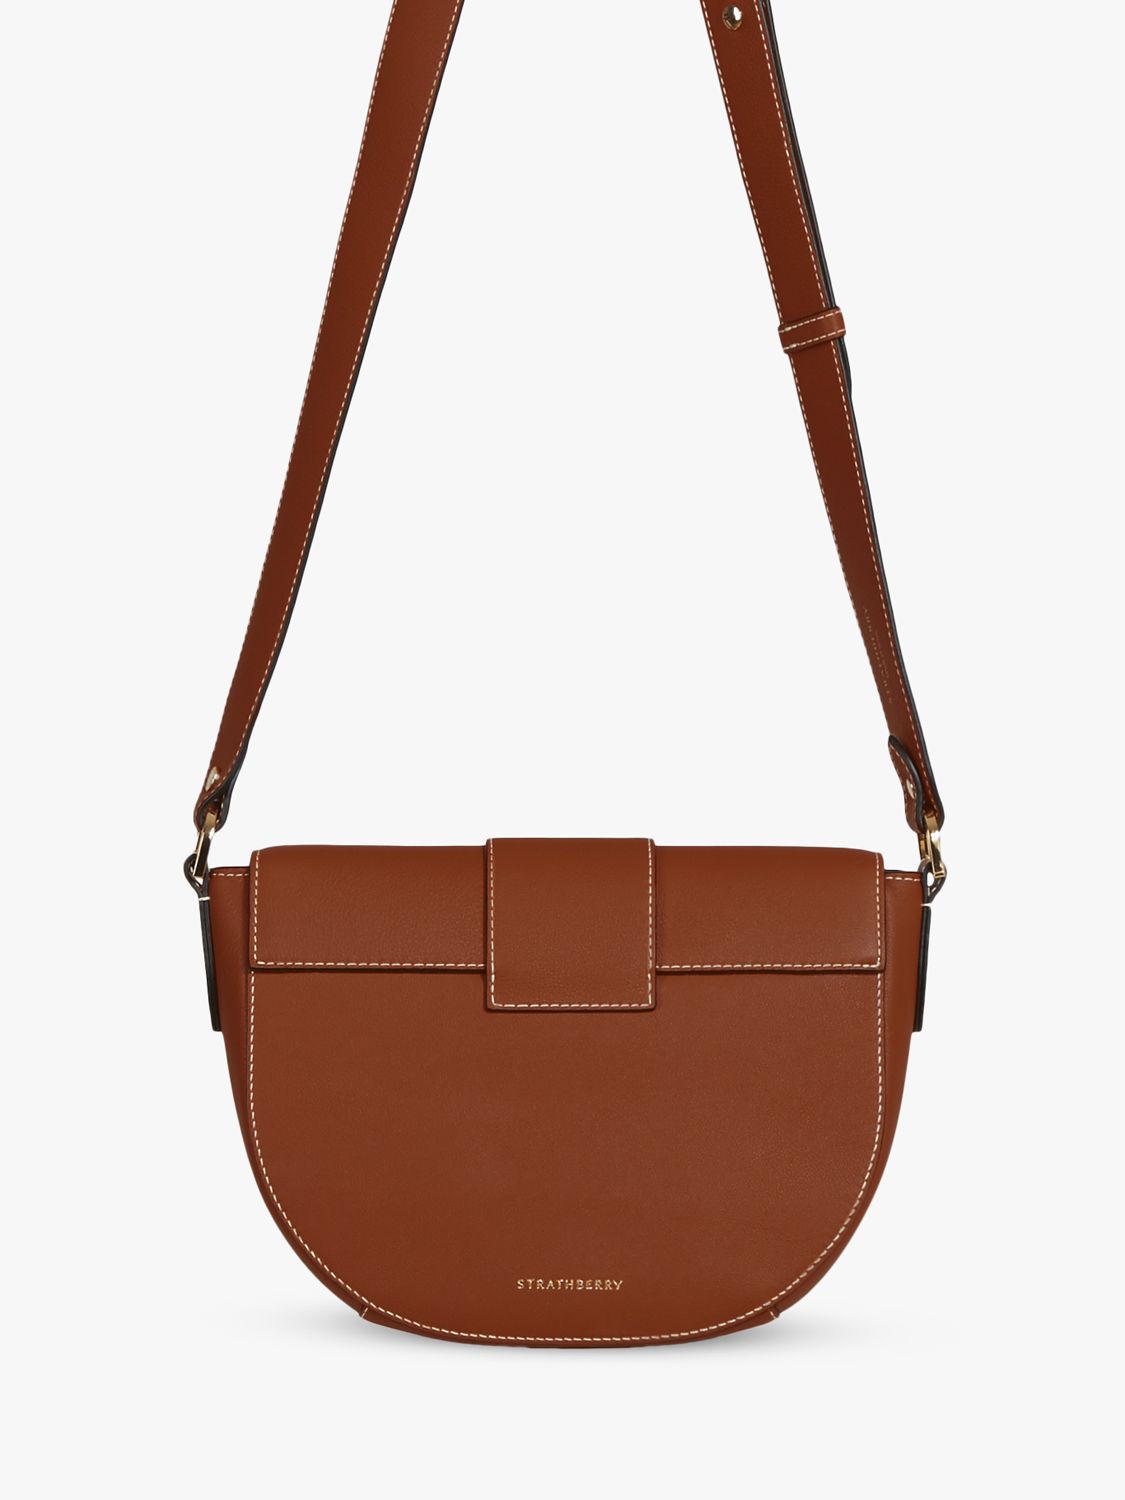 Strathberry Crescent Leather Satchel Bag, Chestnut